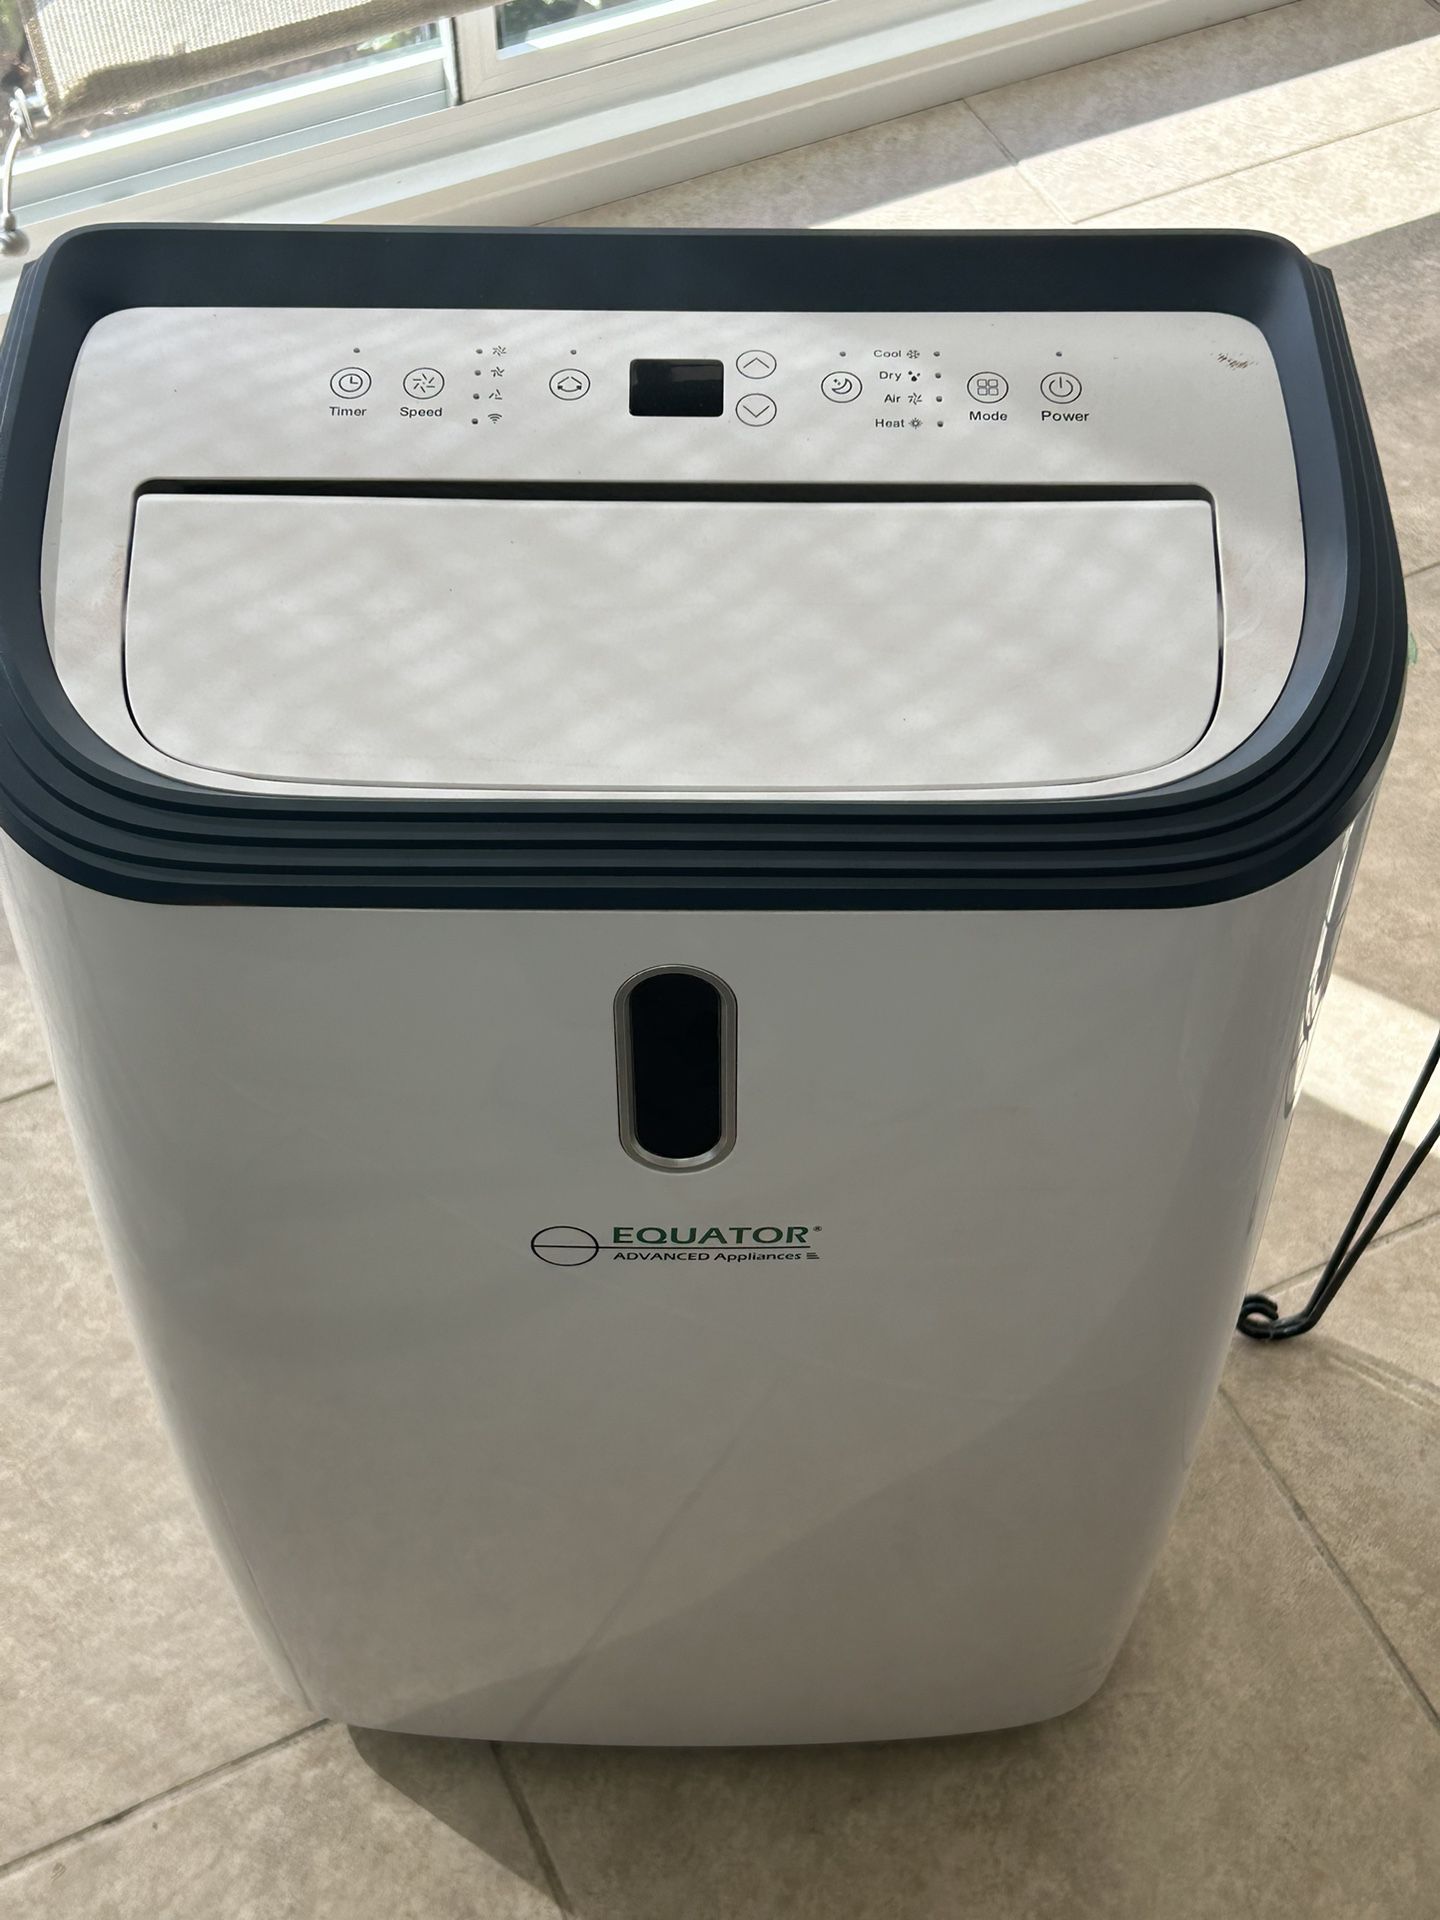 Portable A/C, Heater, Humidifier